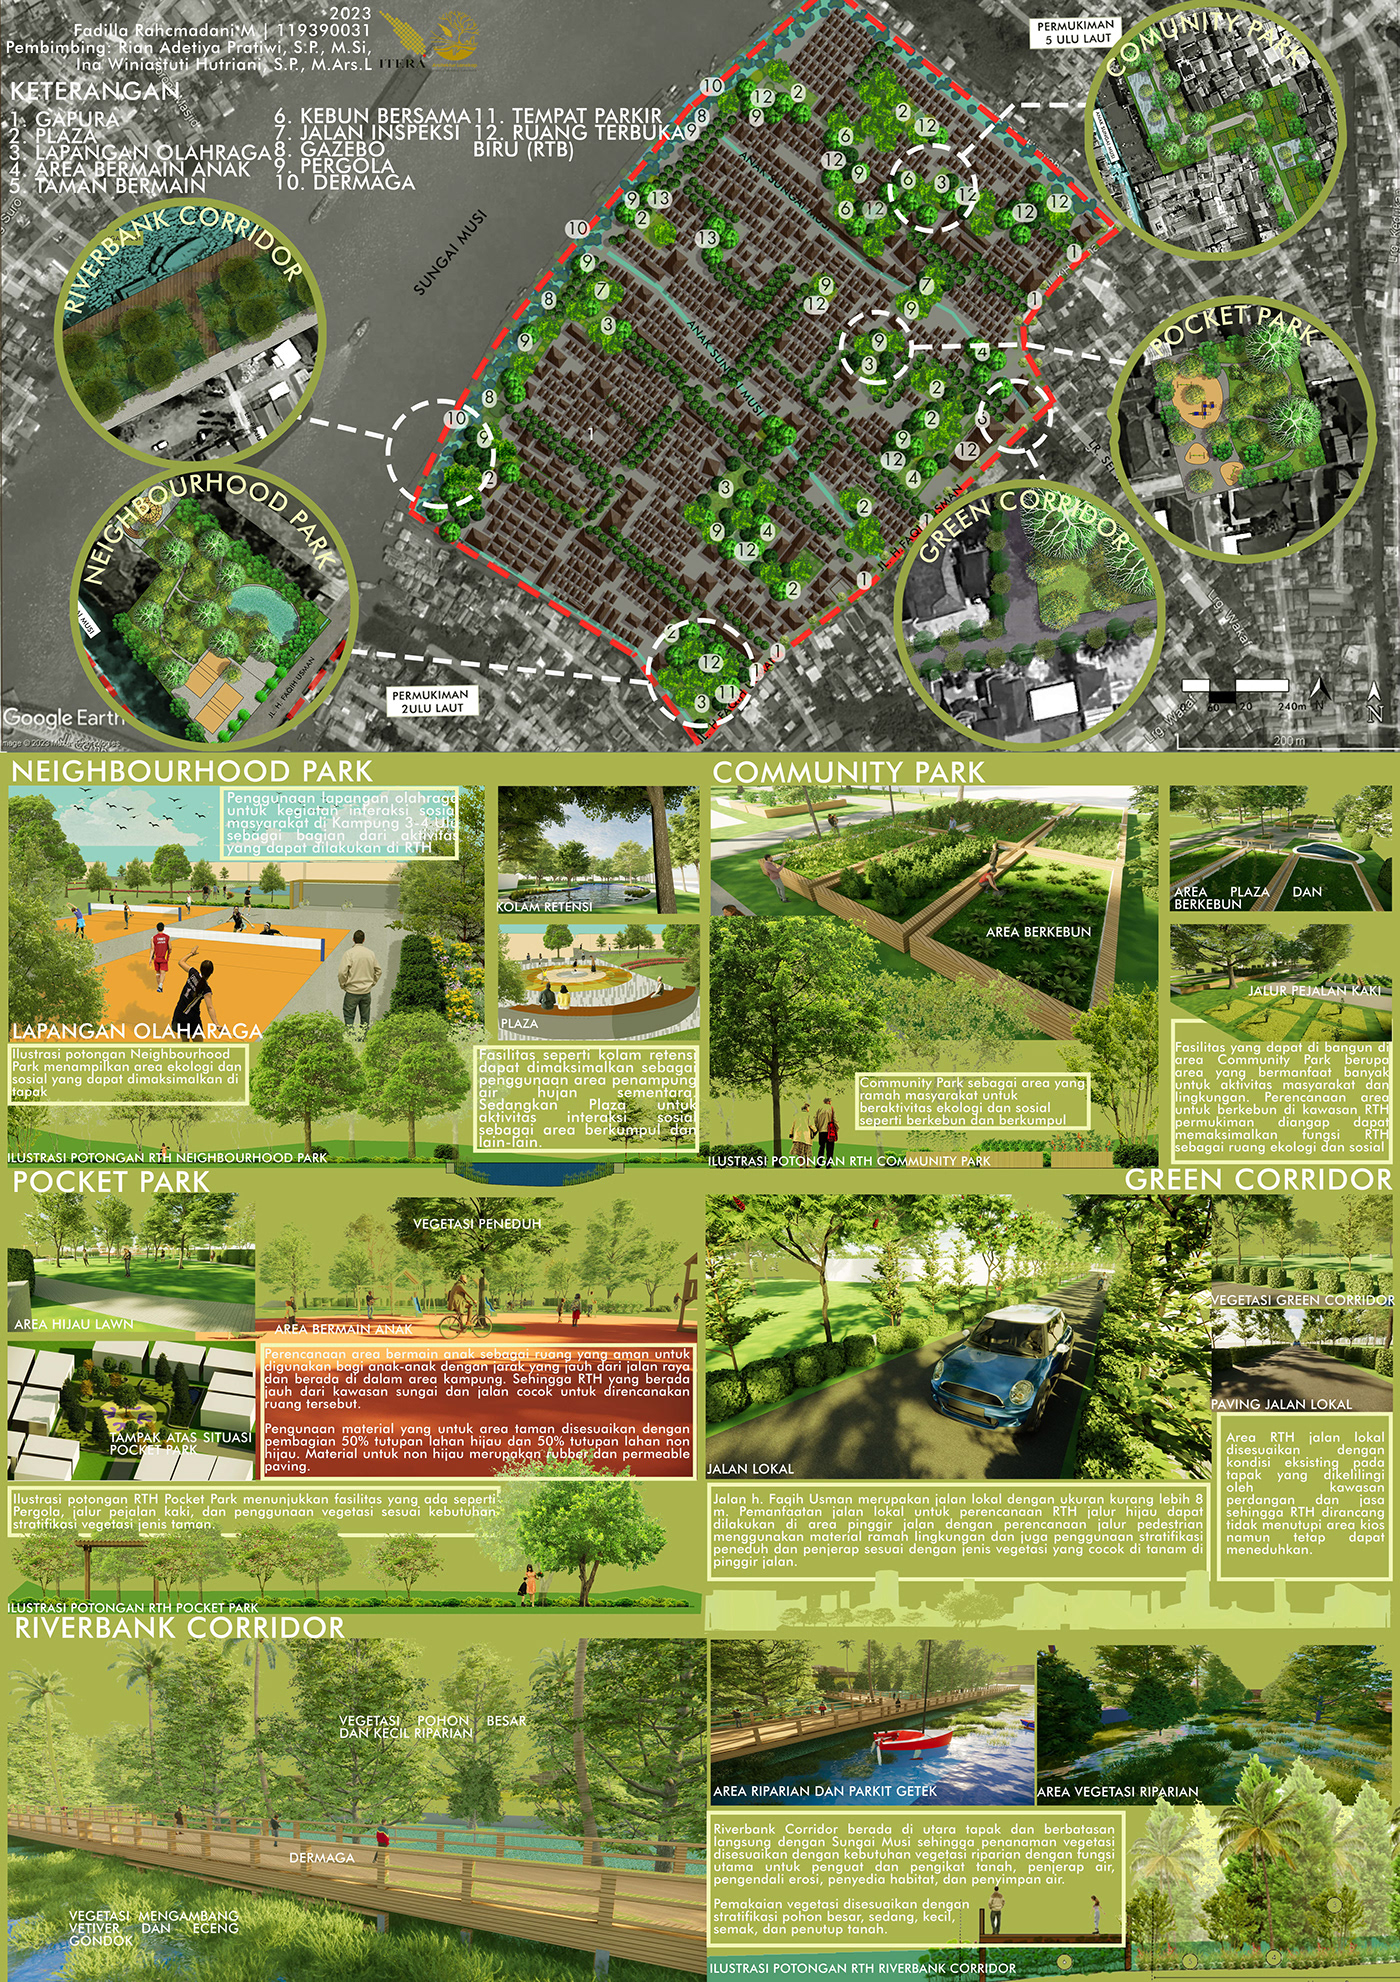 Masterplan design Landscape architecture